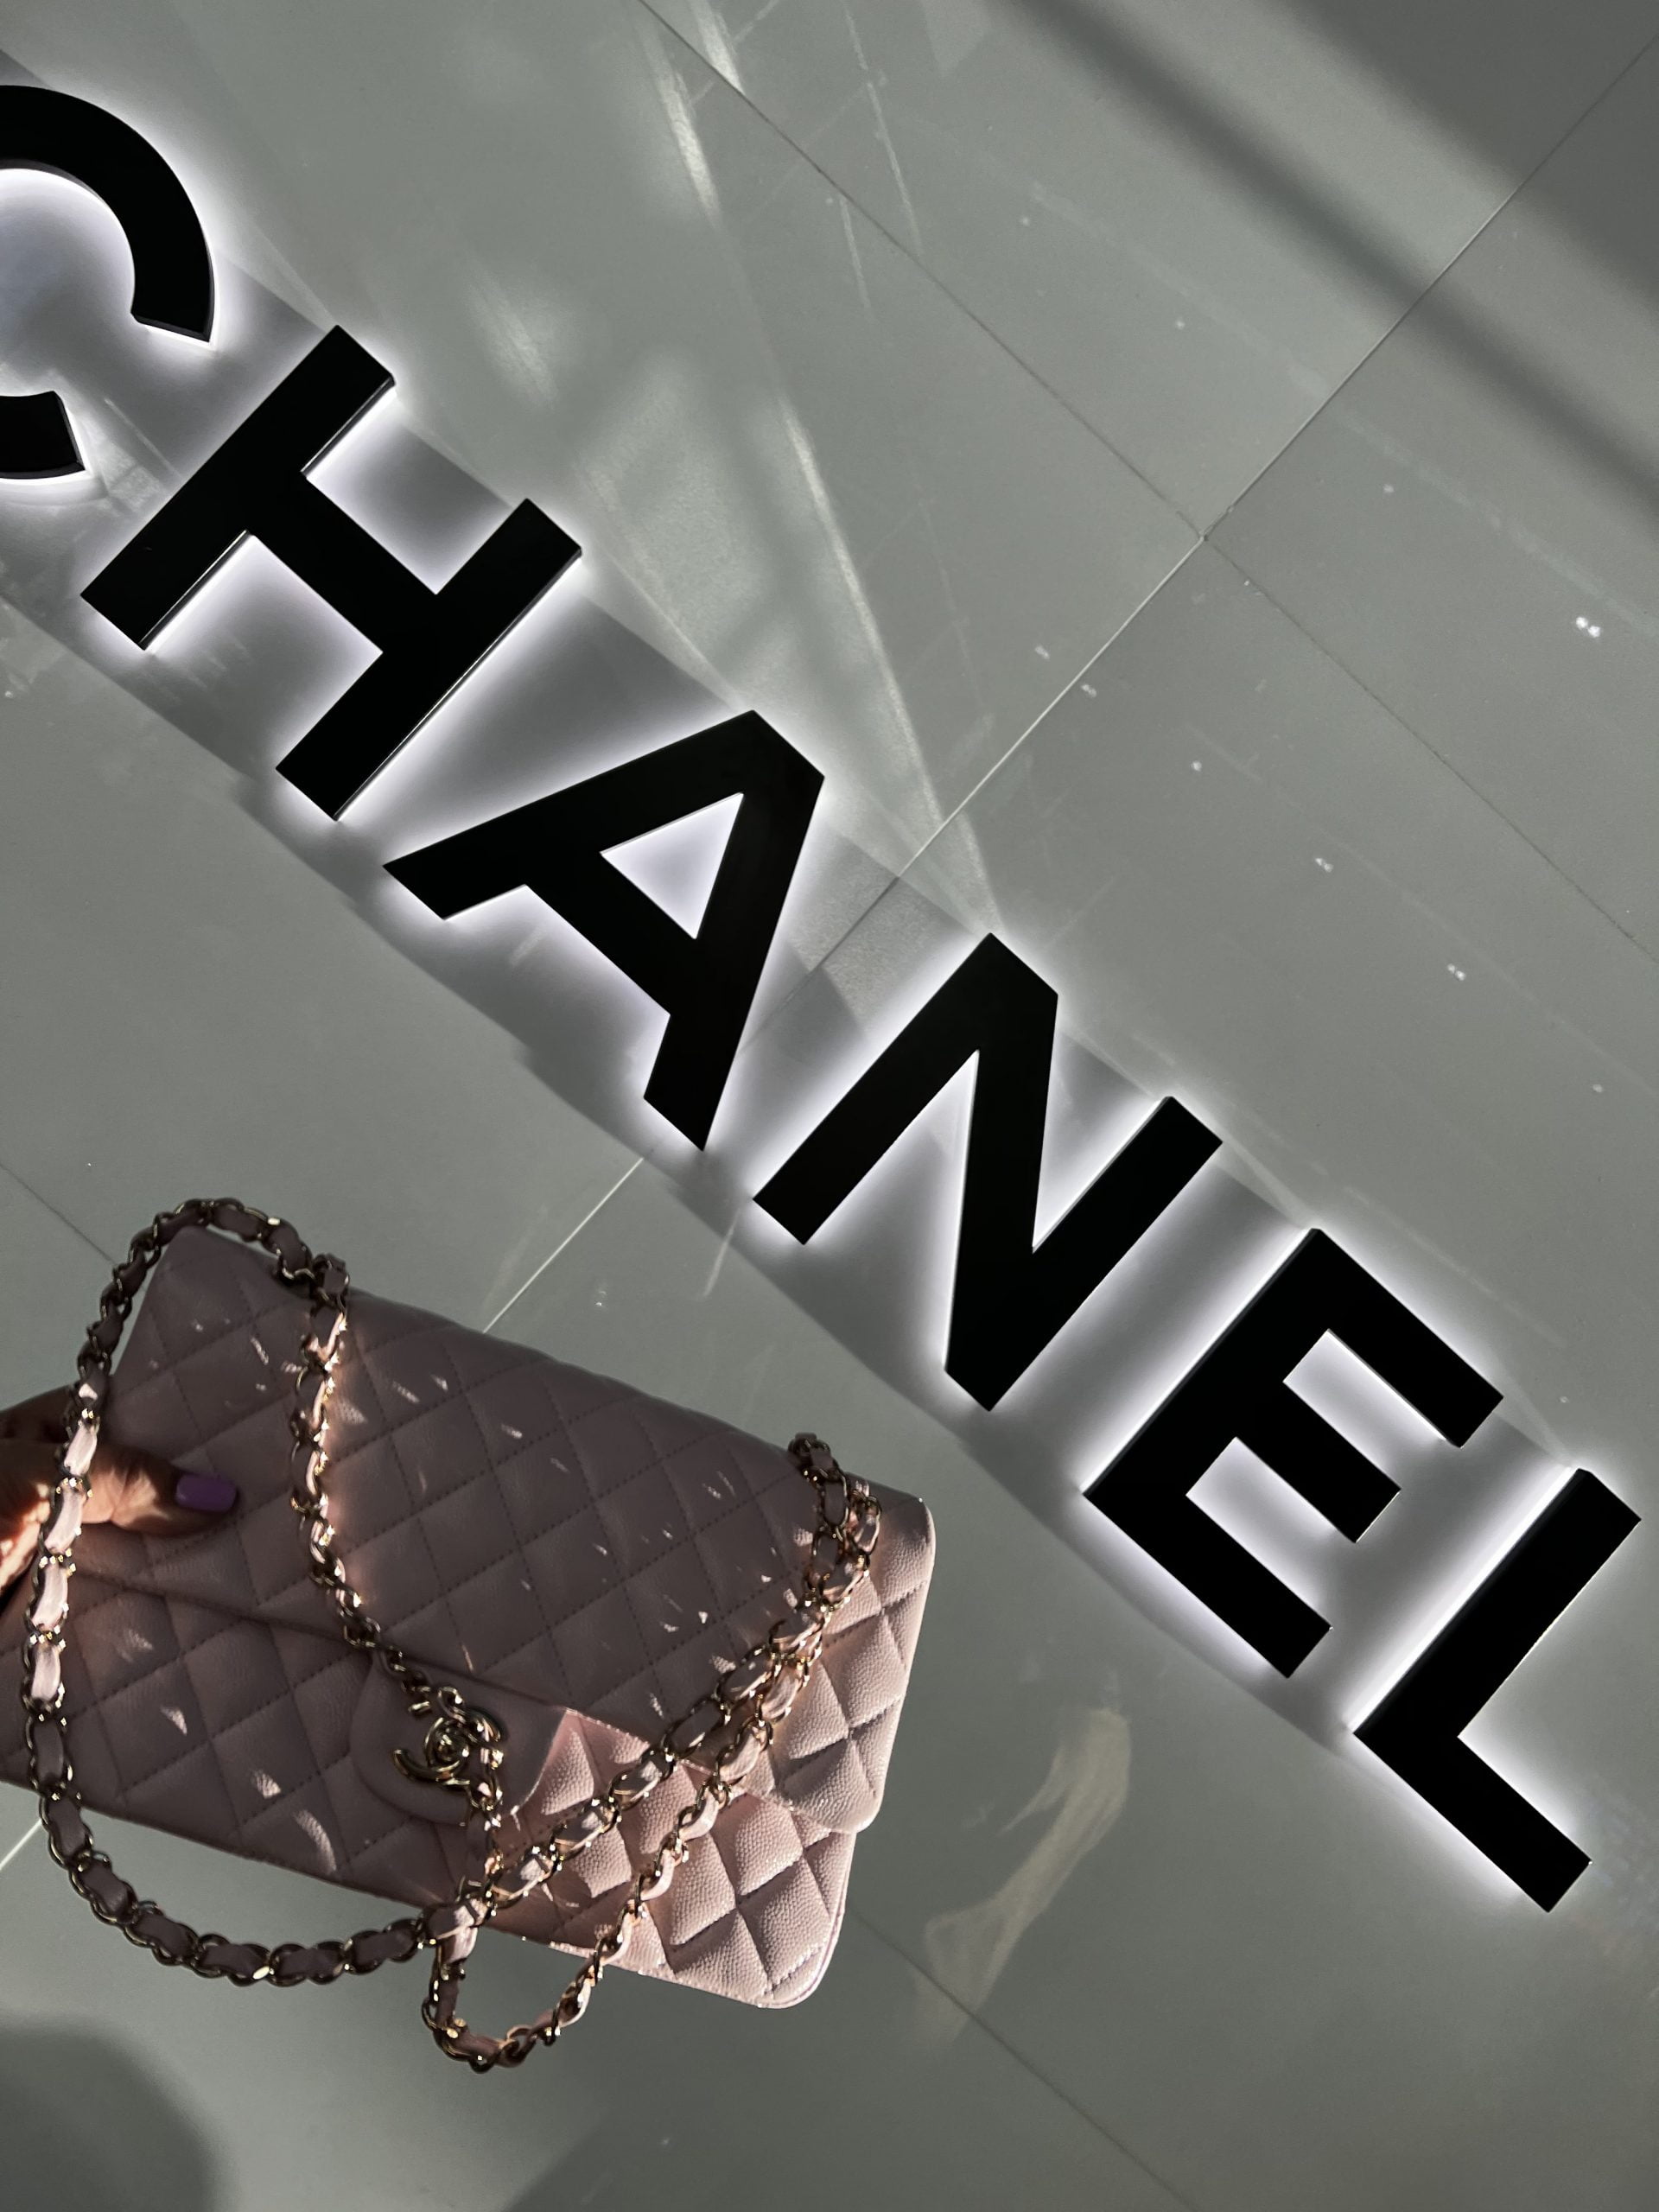 Chanel Bag Prices Euro